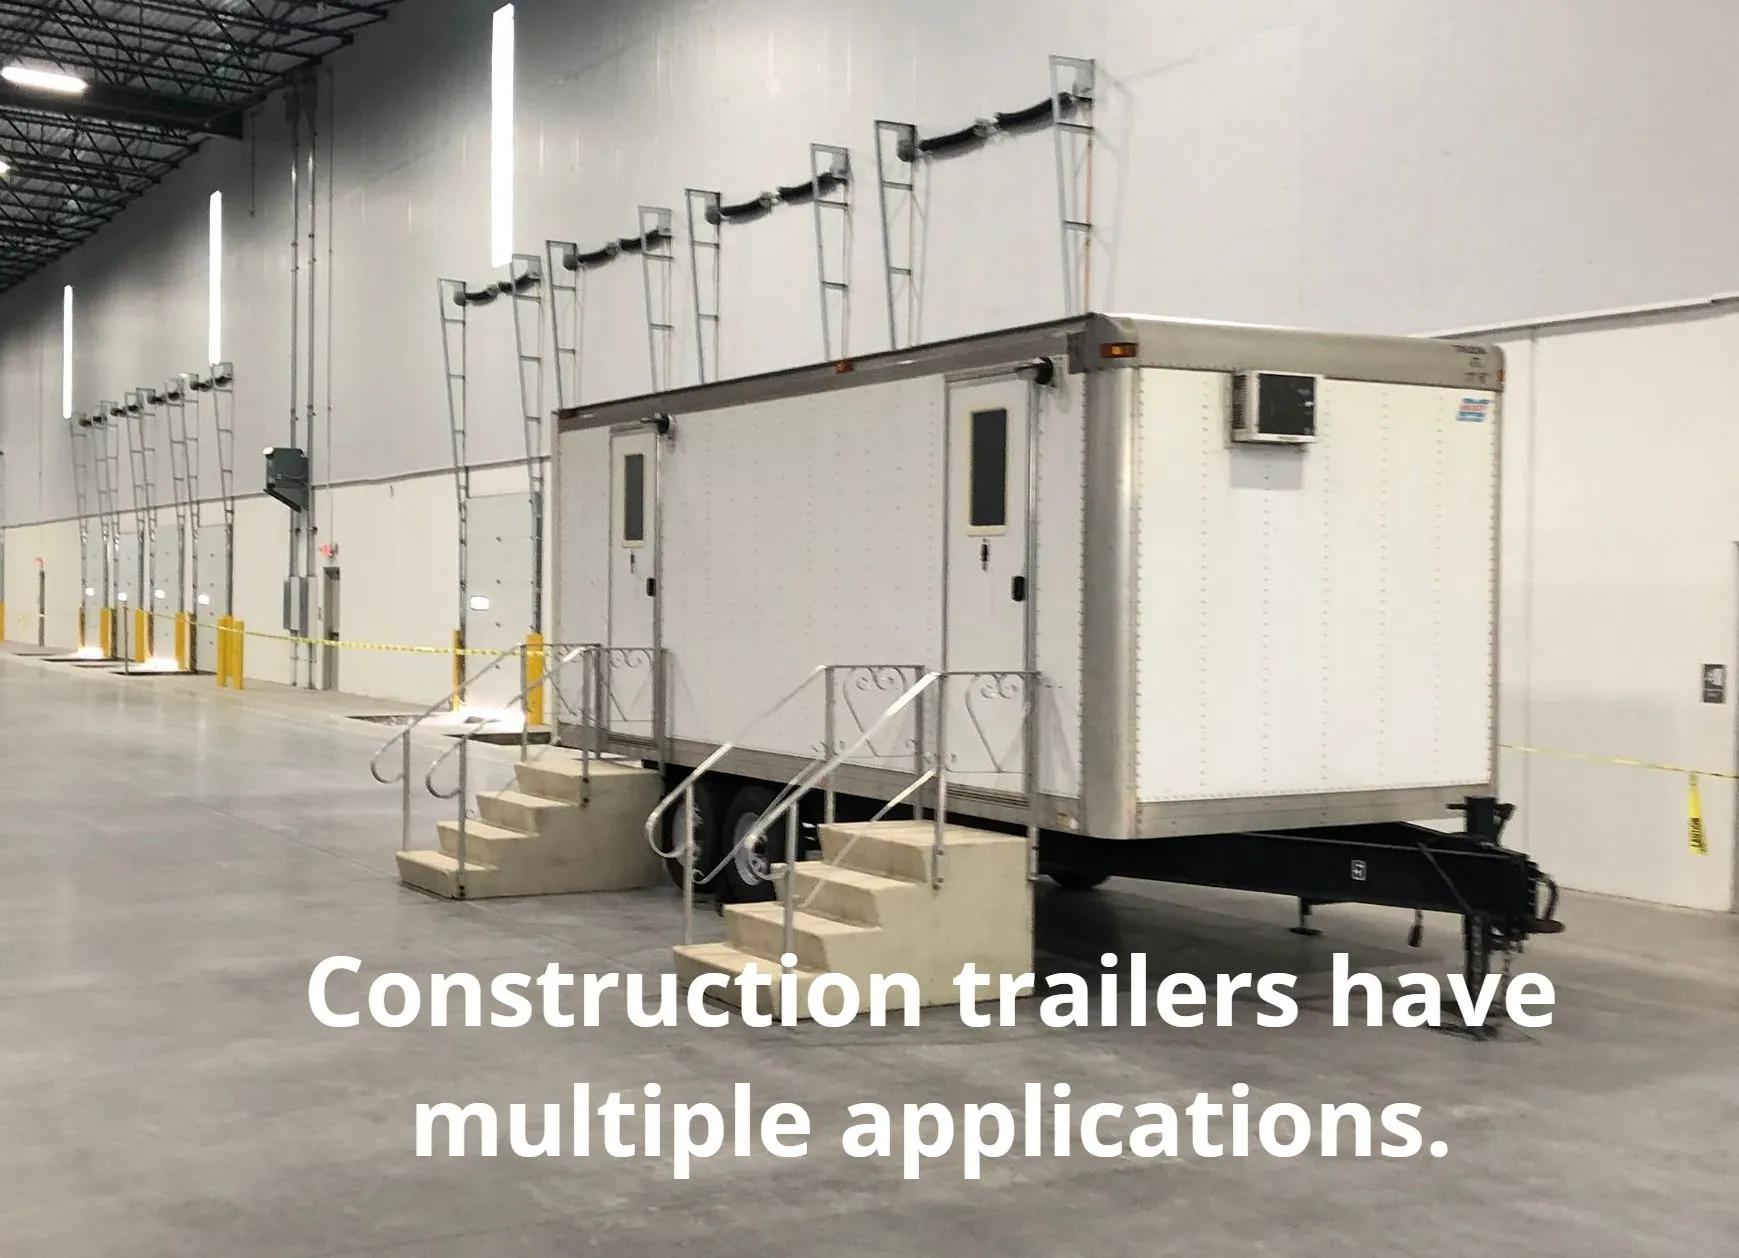 External restroom trailer for construction or events